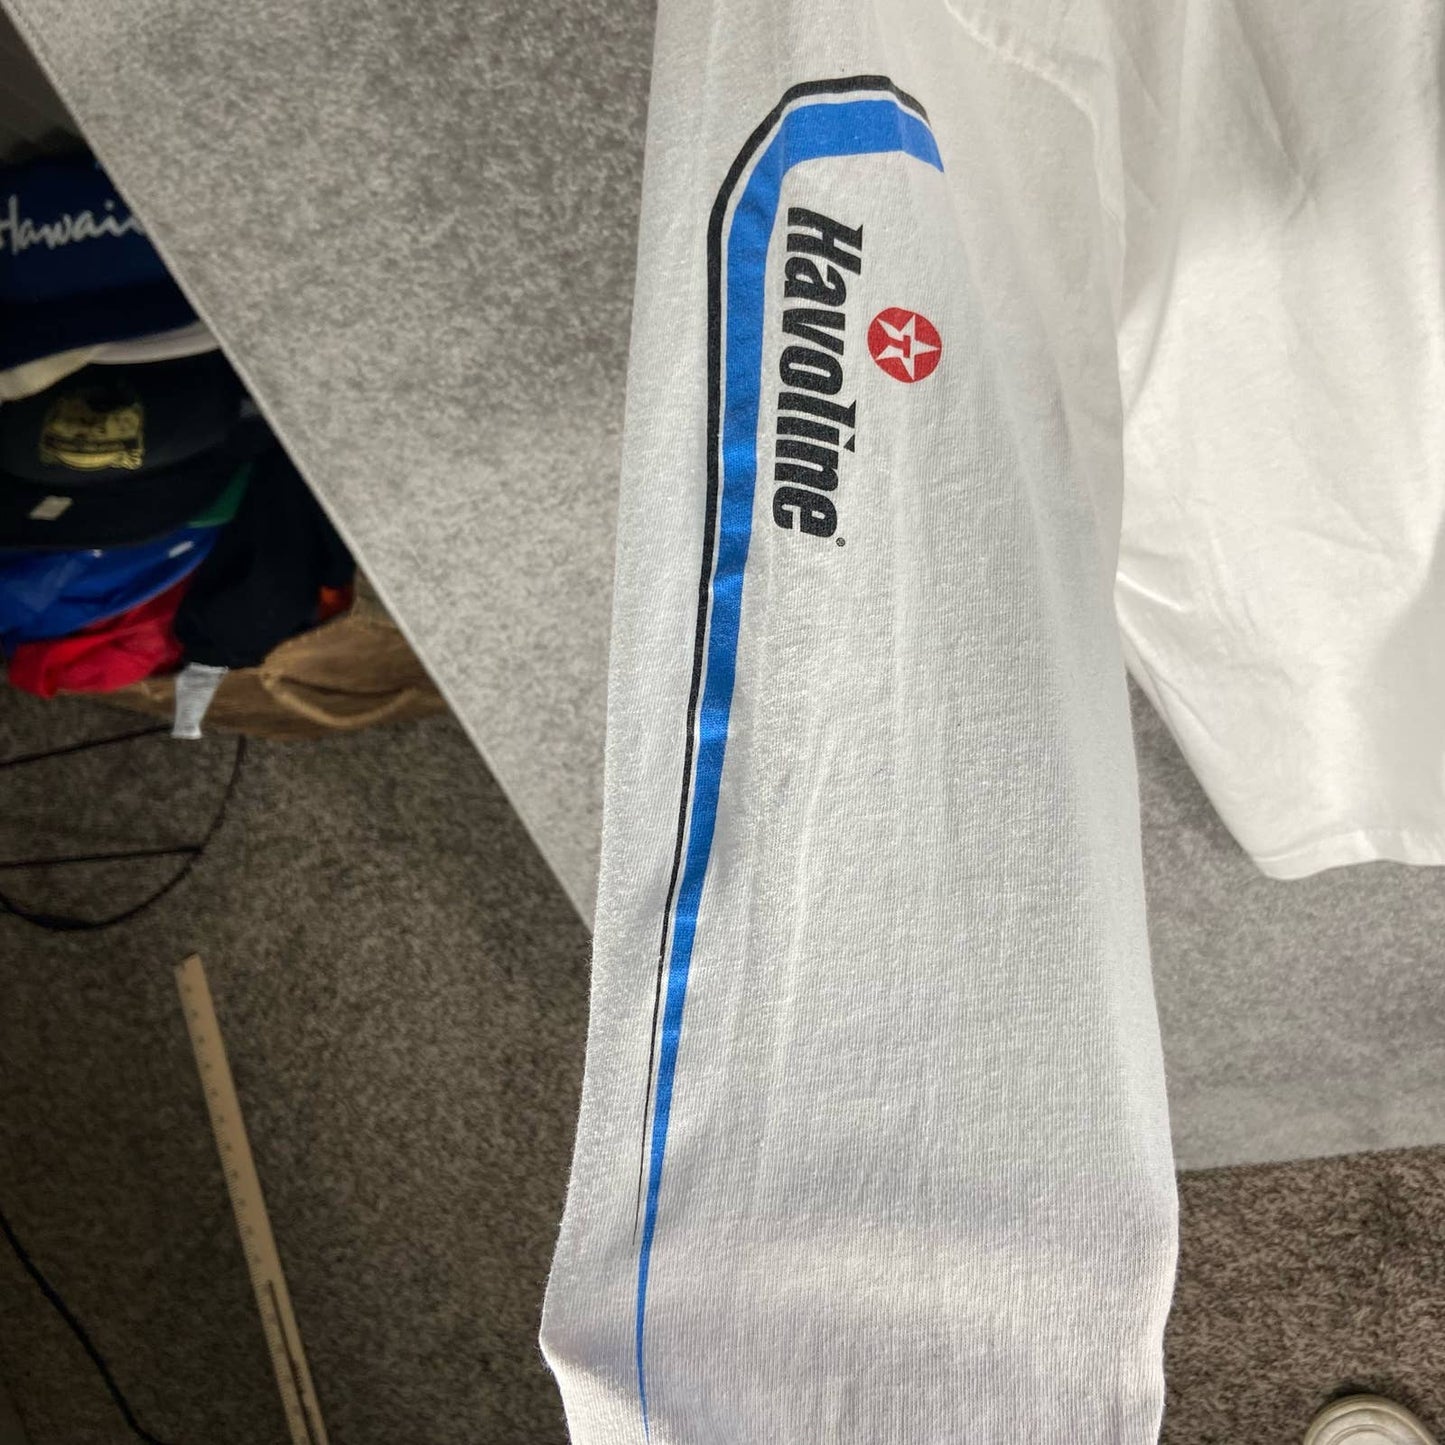 (XL) Jamie McMurray Number 42 NASCAR Long Sleeve T-Shirt